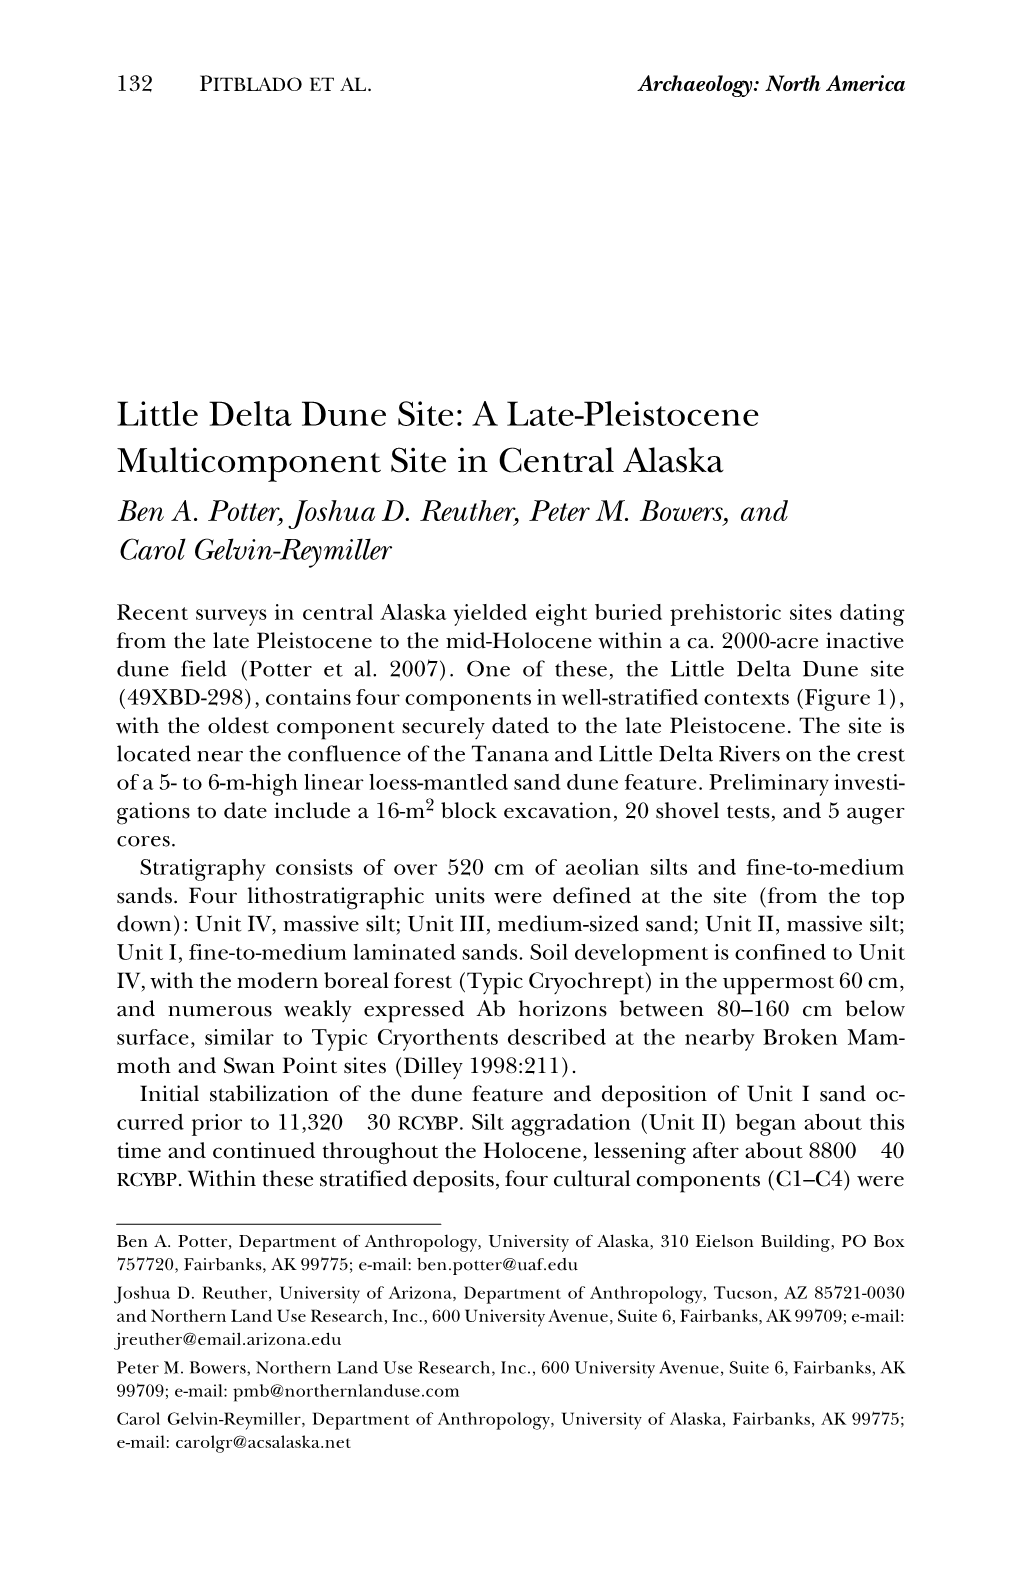 Little Delta Dune Site: a Late-Pleistocene Multicomponent Site in Central Alaska Ben A